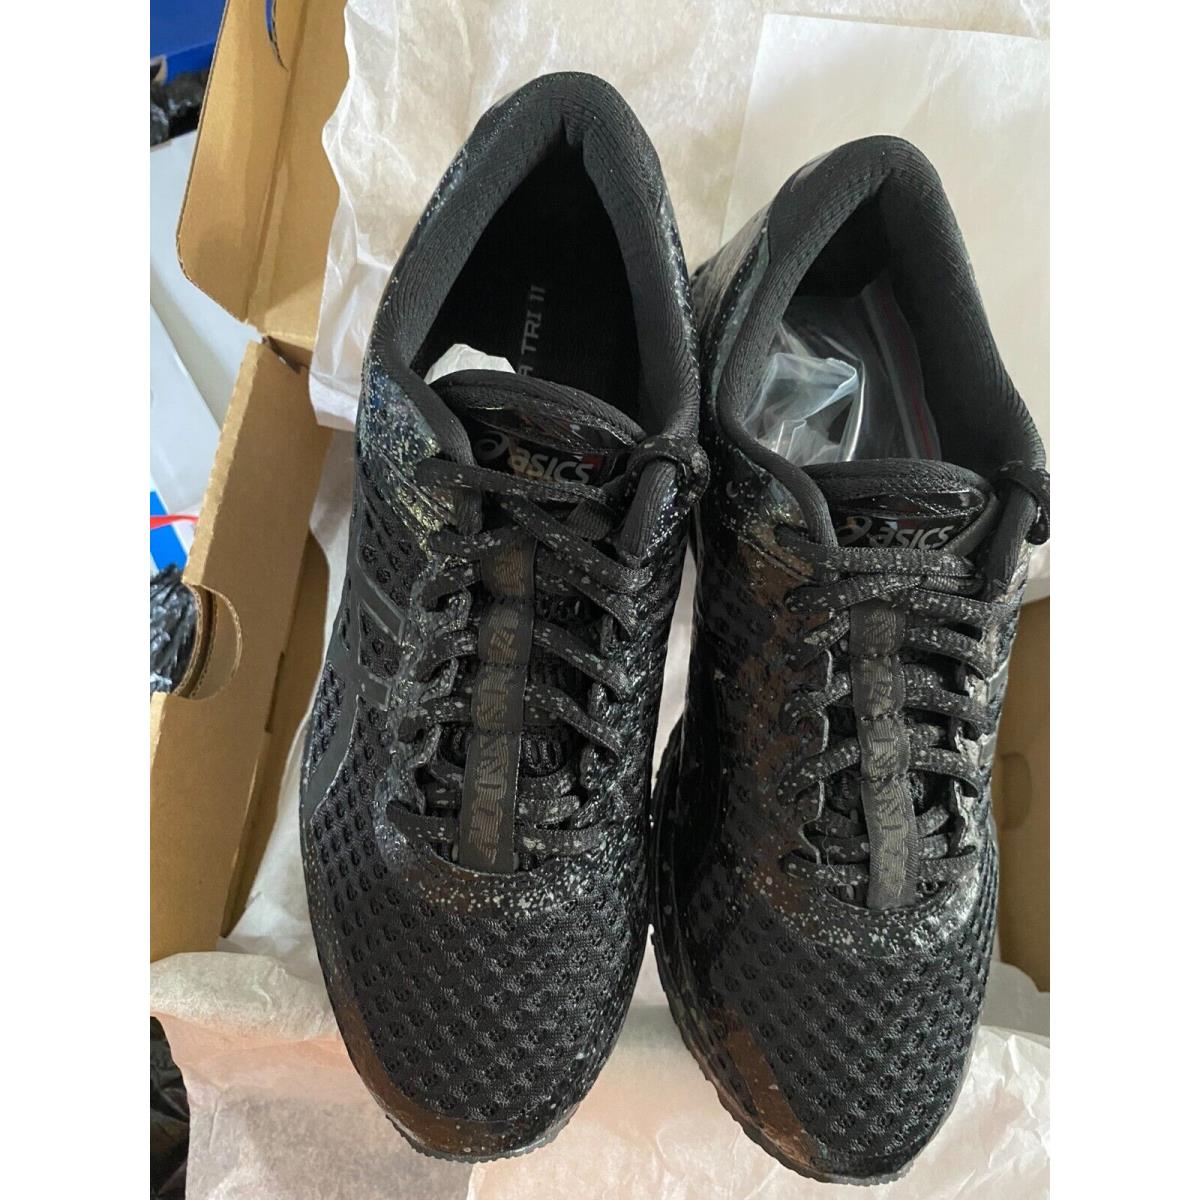 ASICS shoes Tri - Black/Charcoal 8